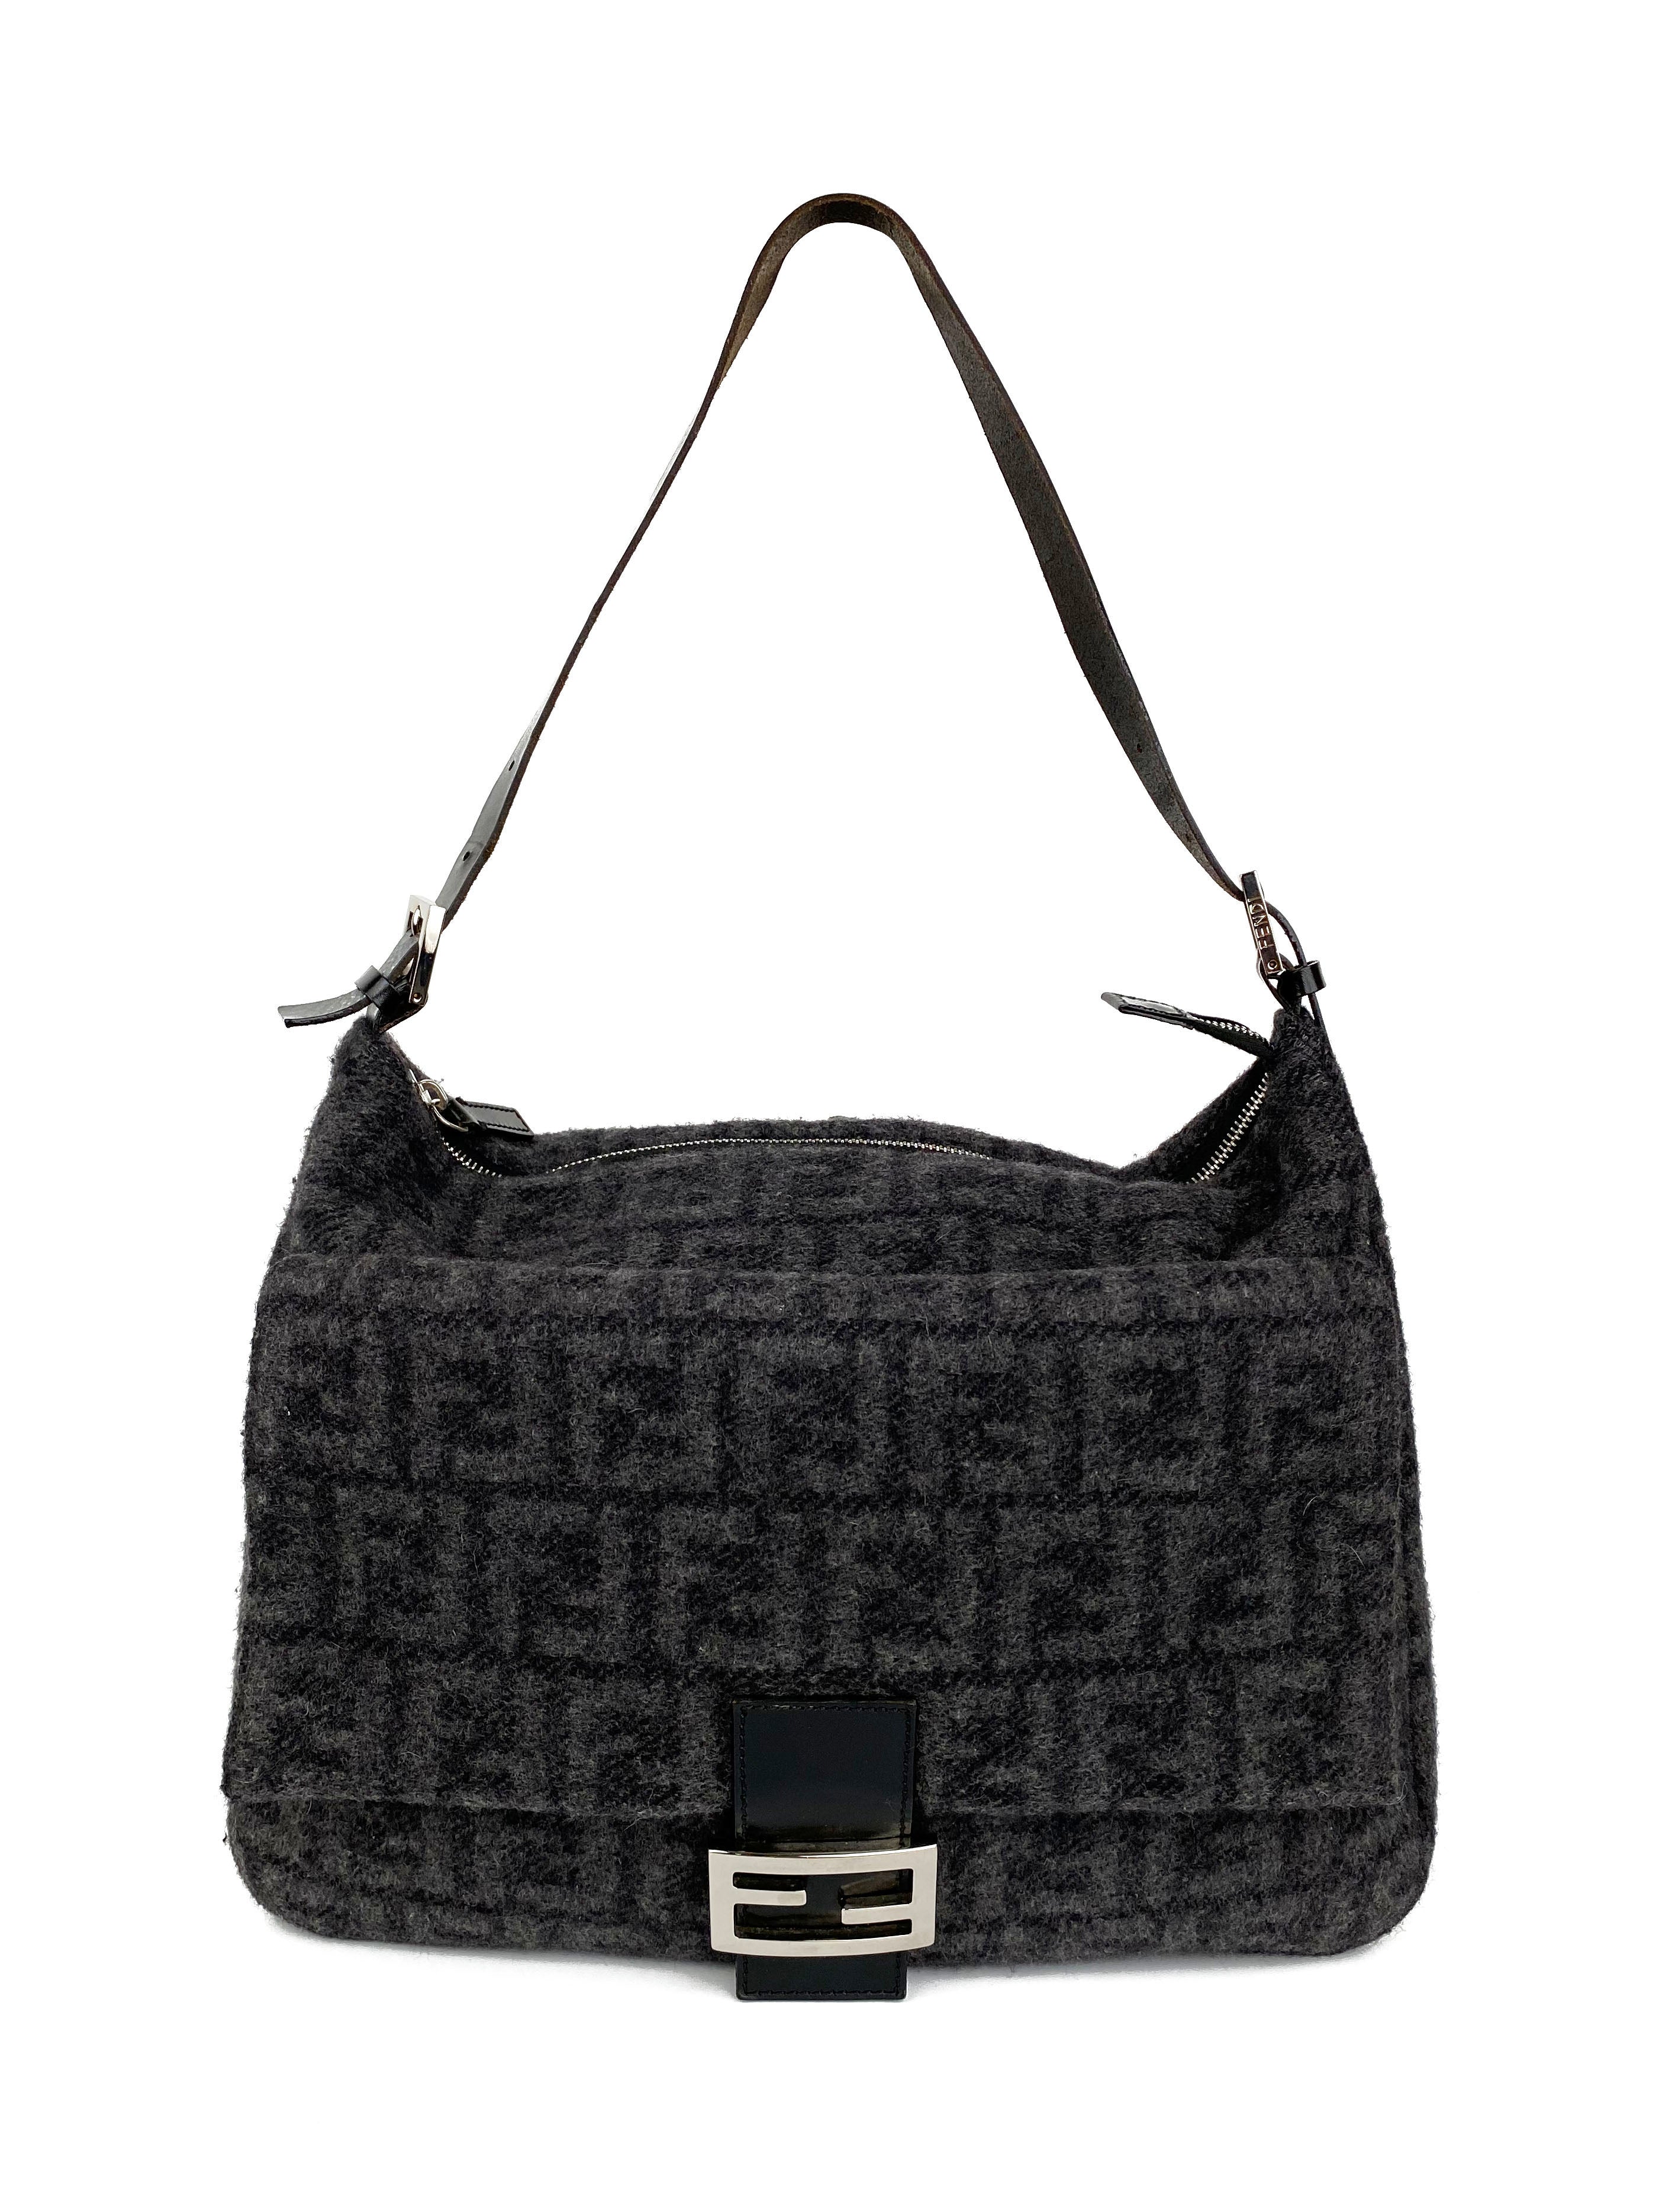 Fendi Black Wool Baguette Bag